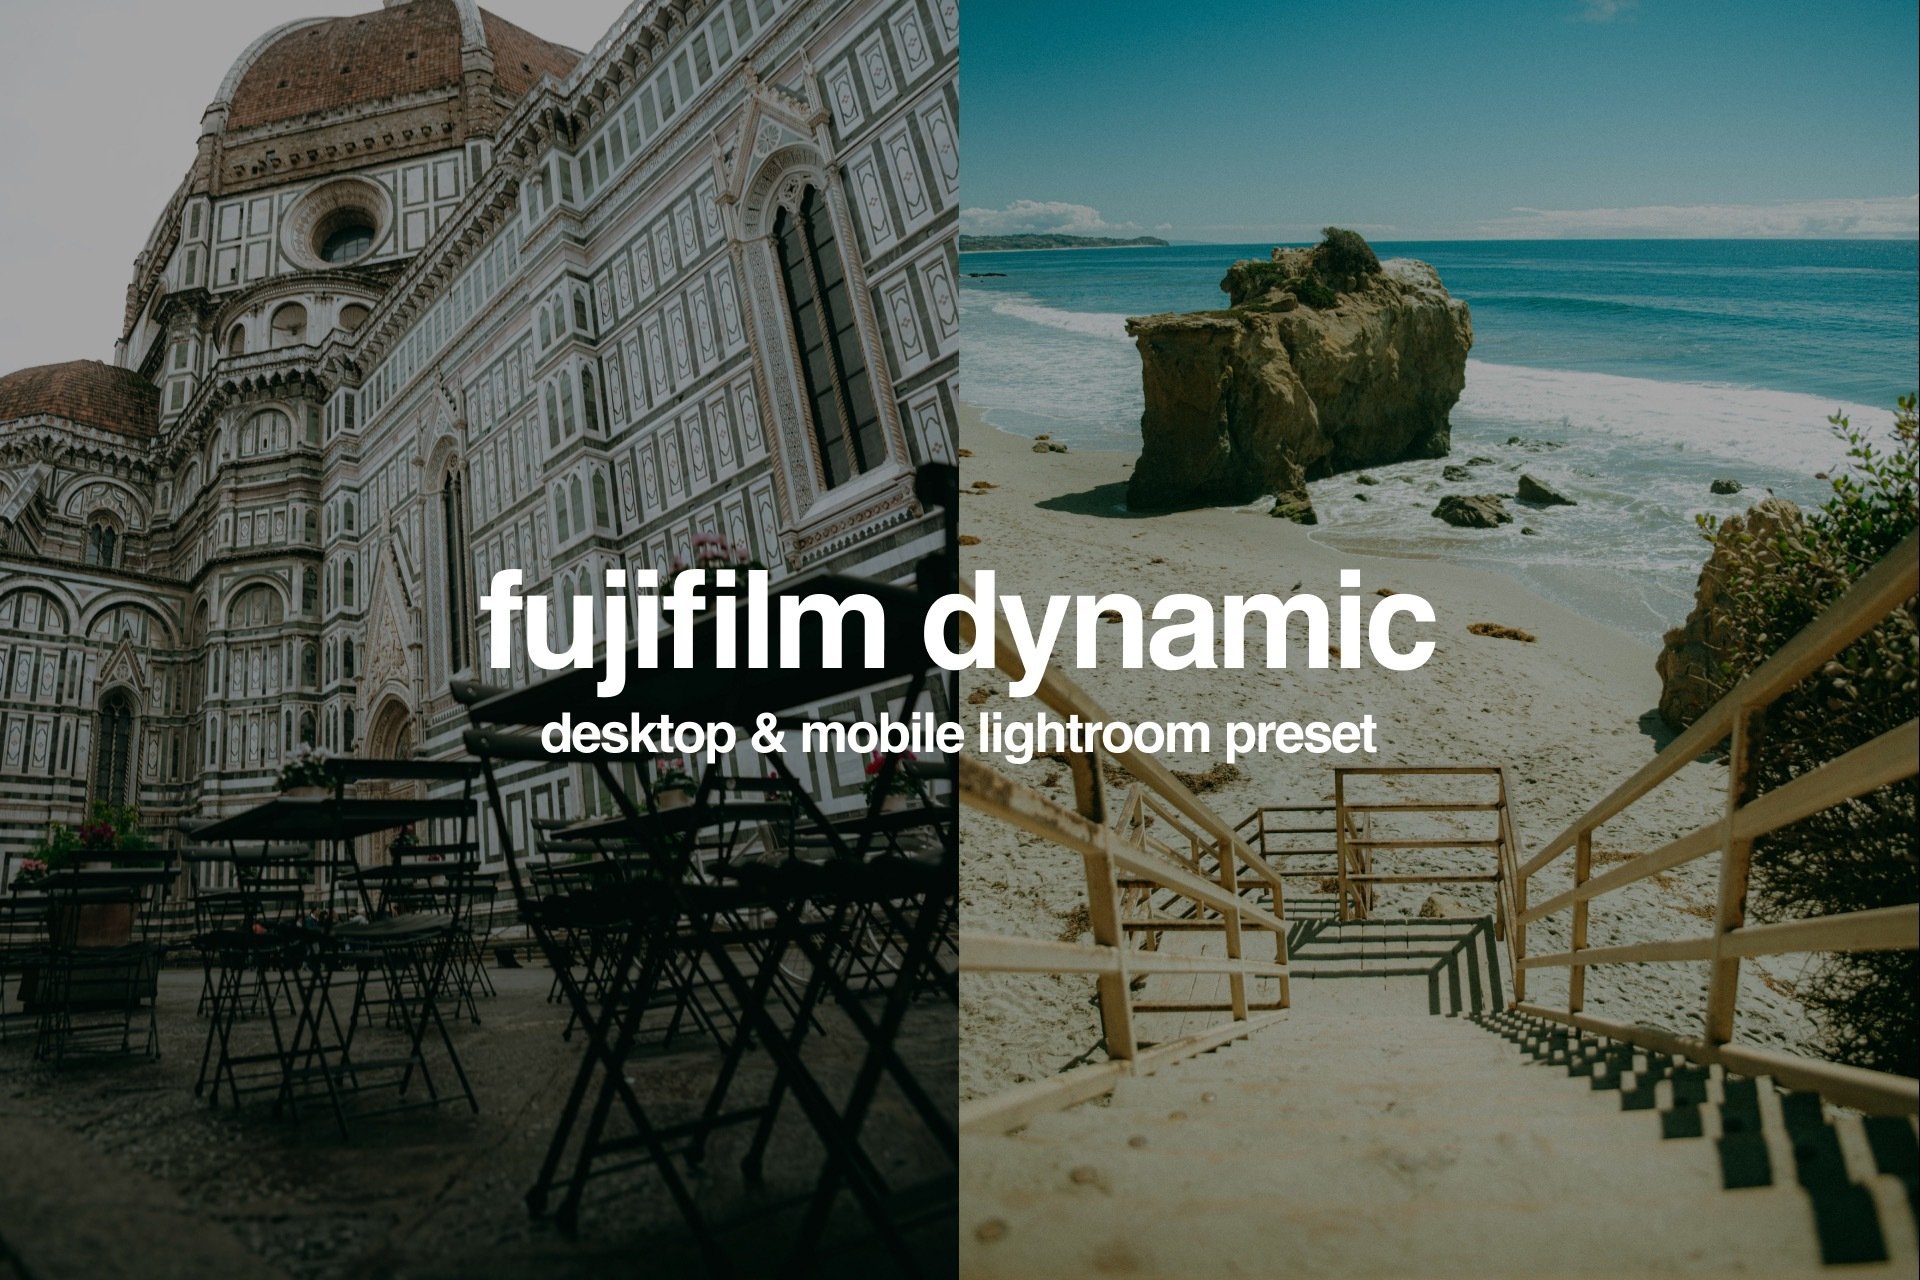 Free Fujifilm Dynamic Light Preset